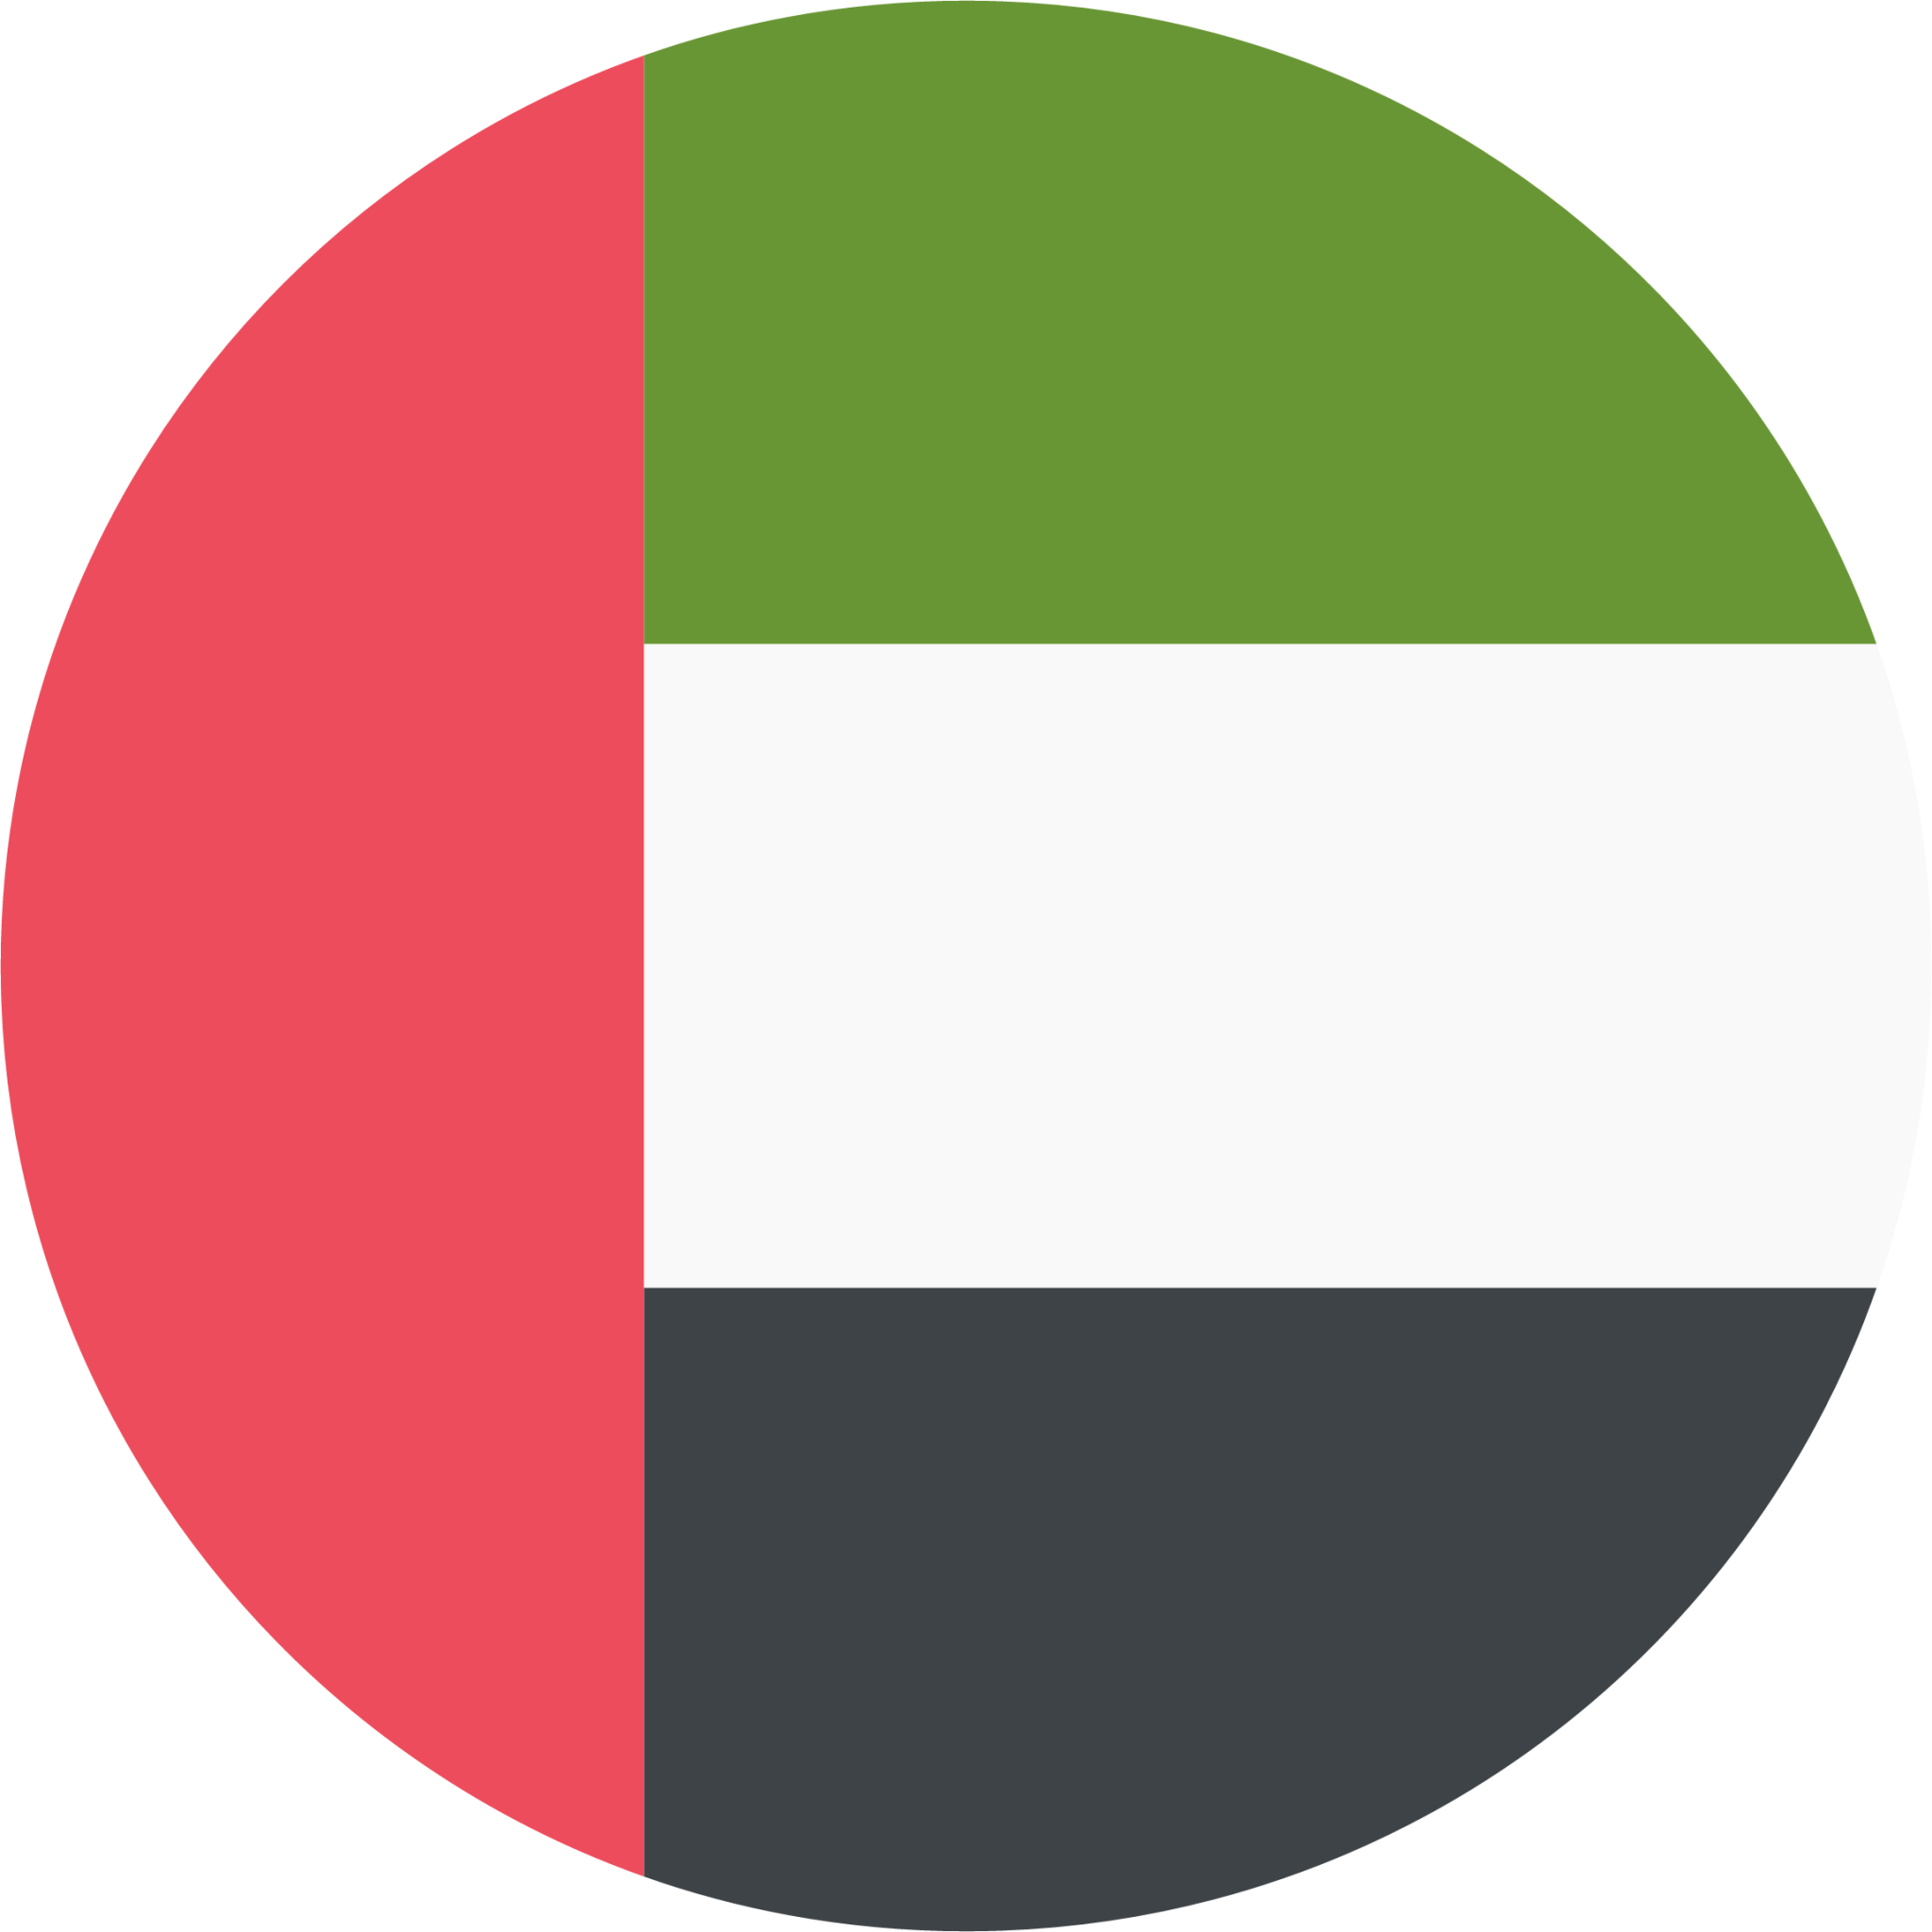 the united arab emirates emoji